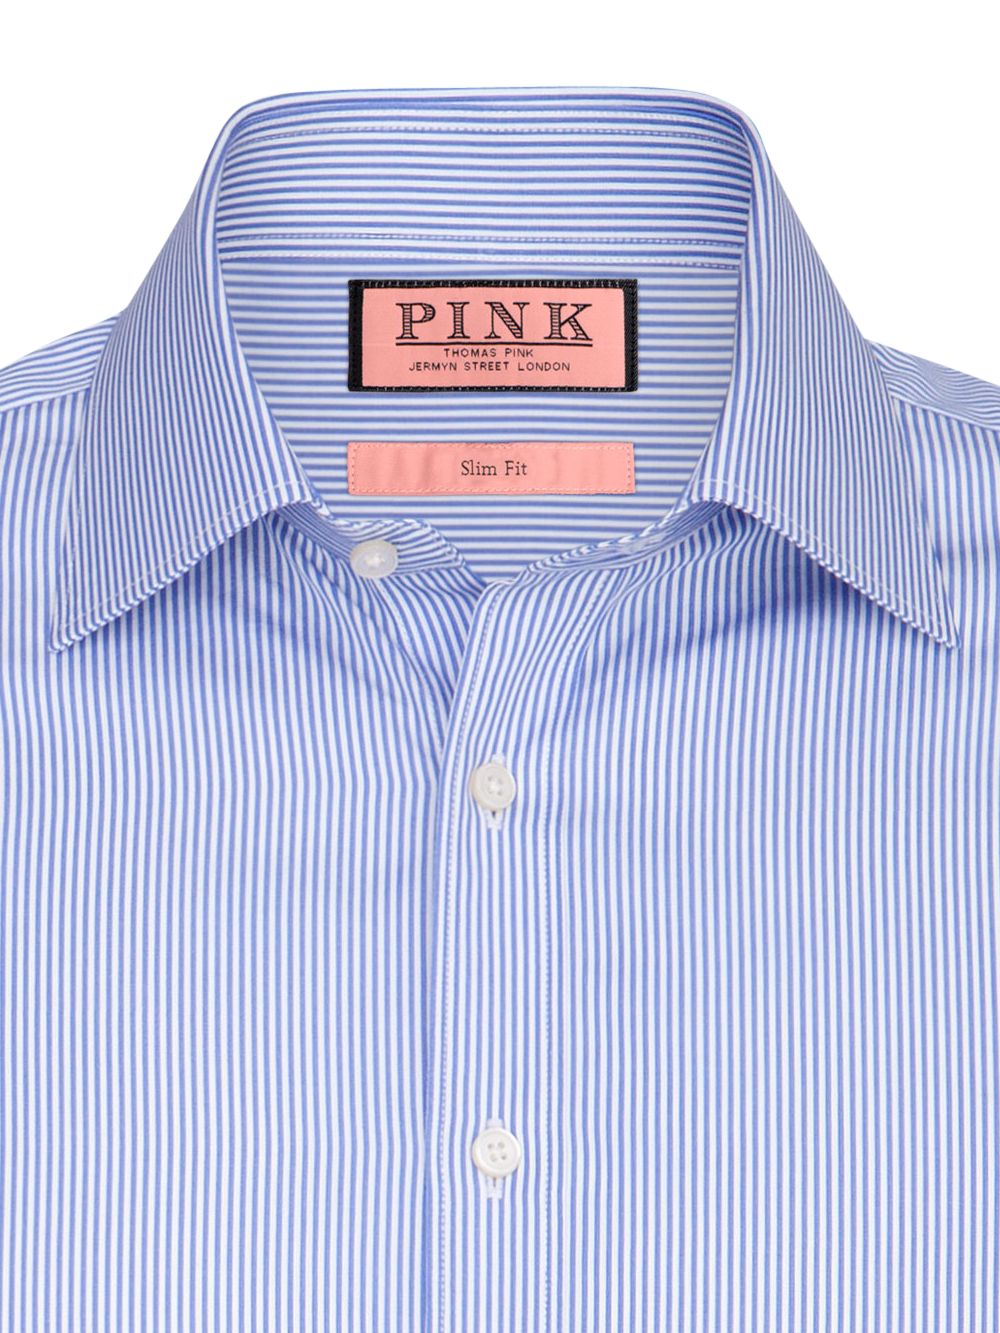 Thomas PINK Jermyn Street London Men Pink Casual Dress Shirt Size